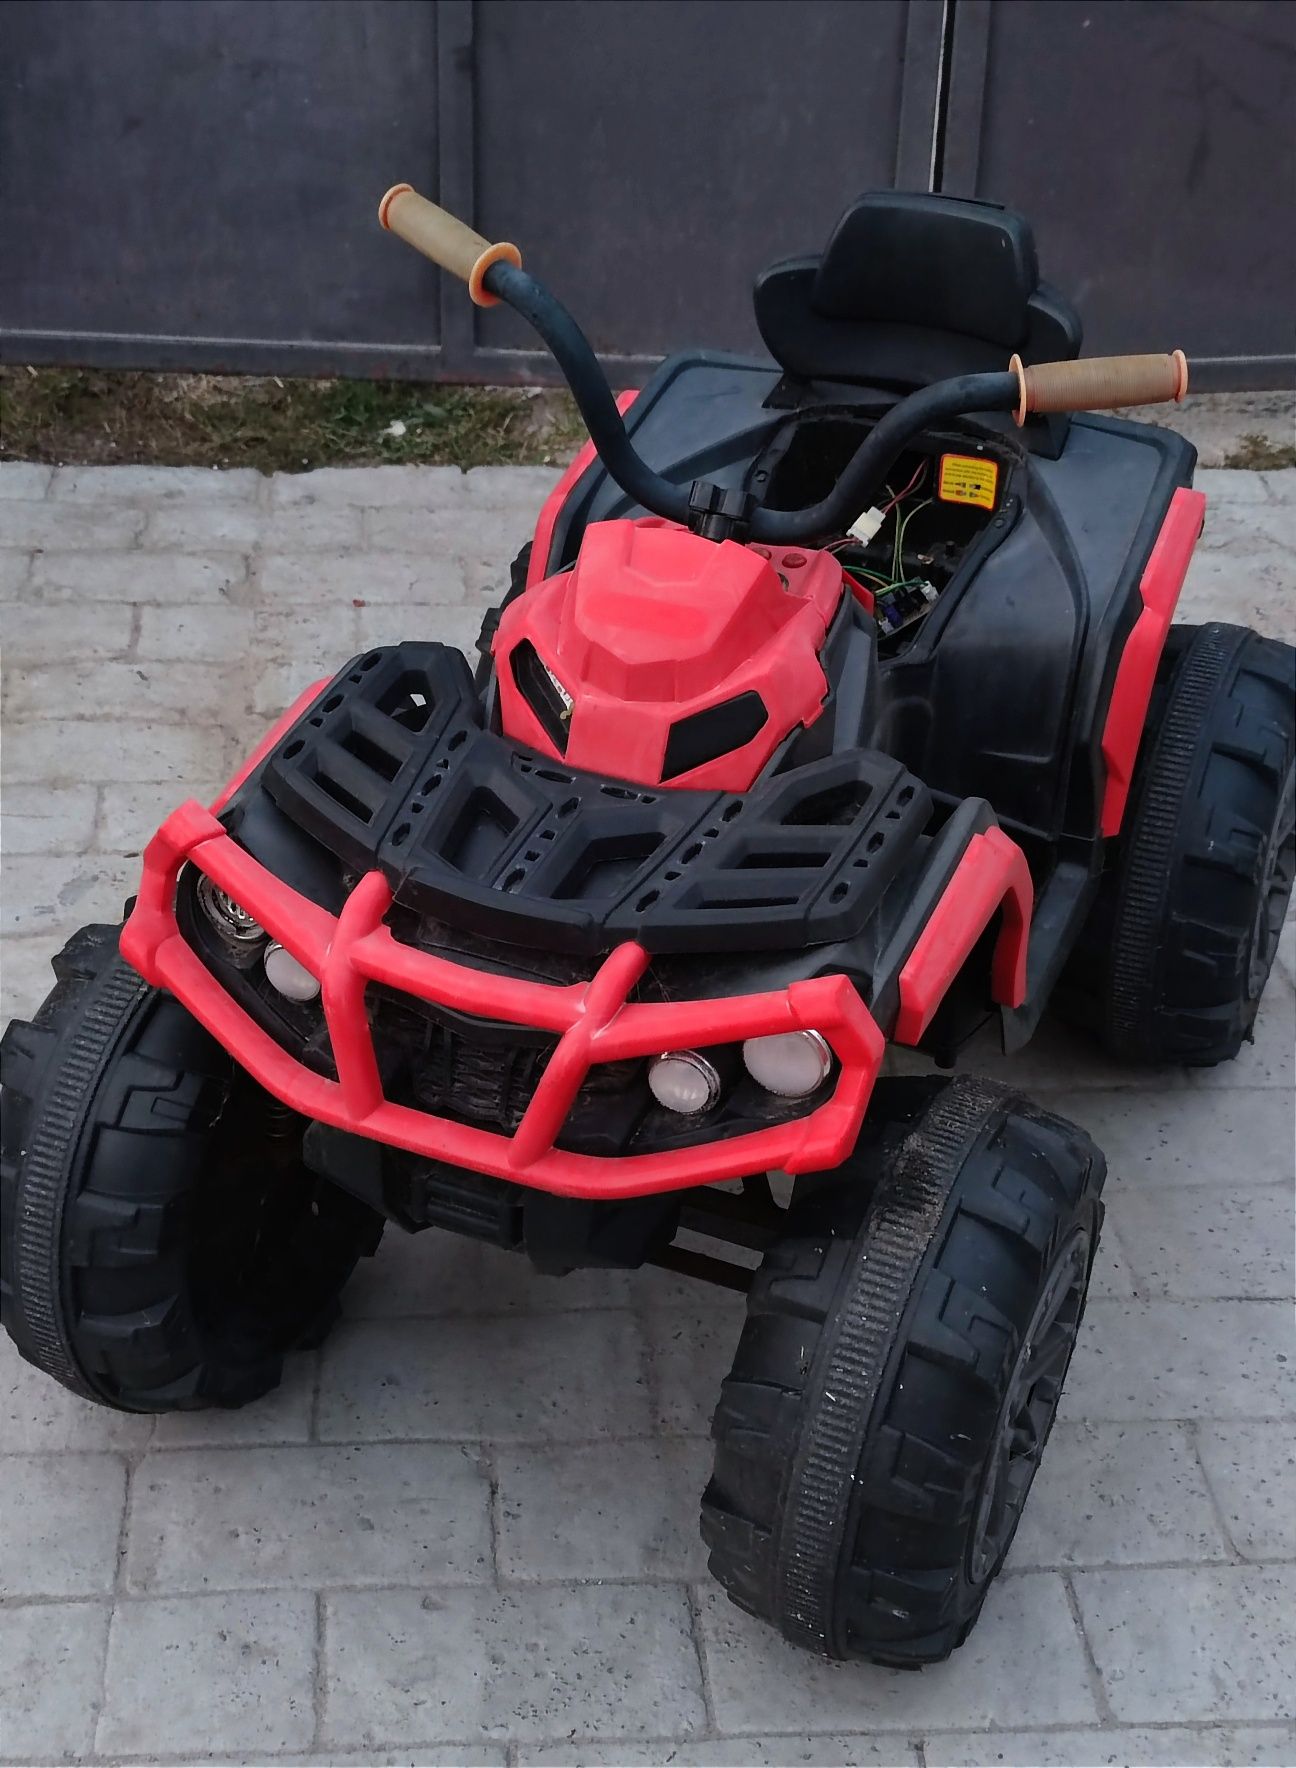 Детский квадроцикл корпус, без акумулятора и мотора
Baby Til